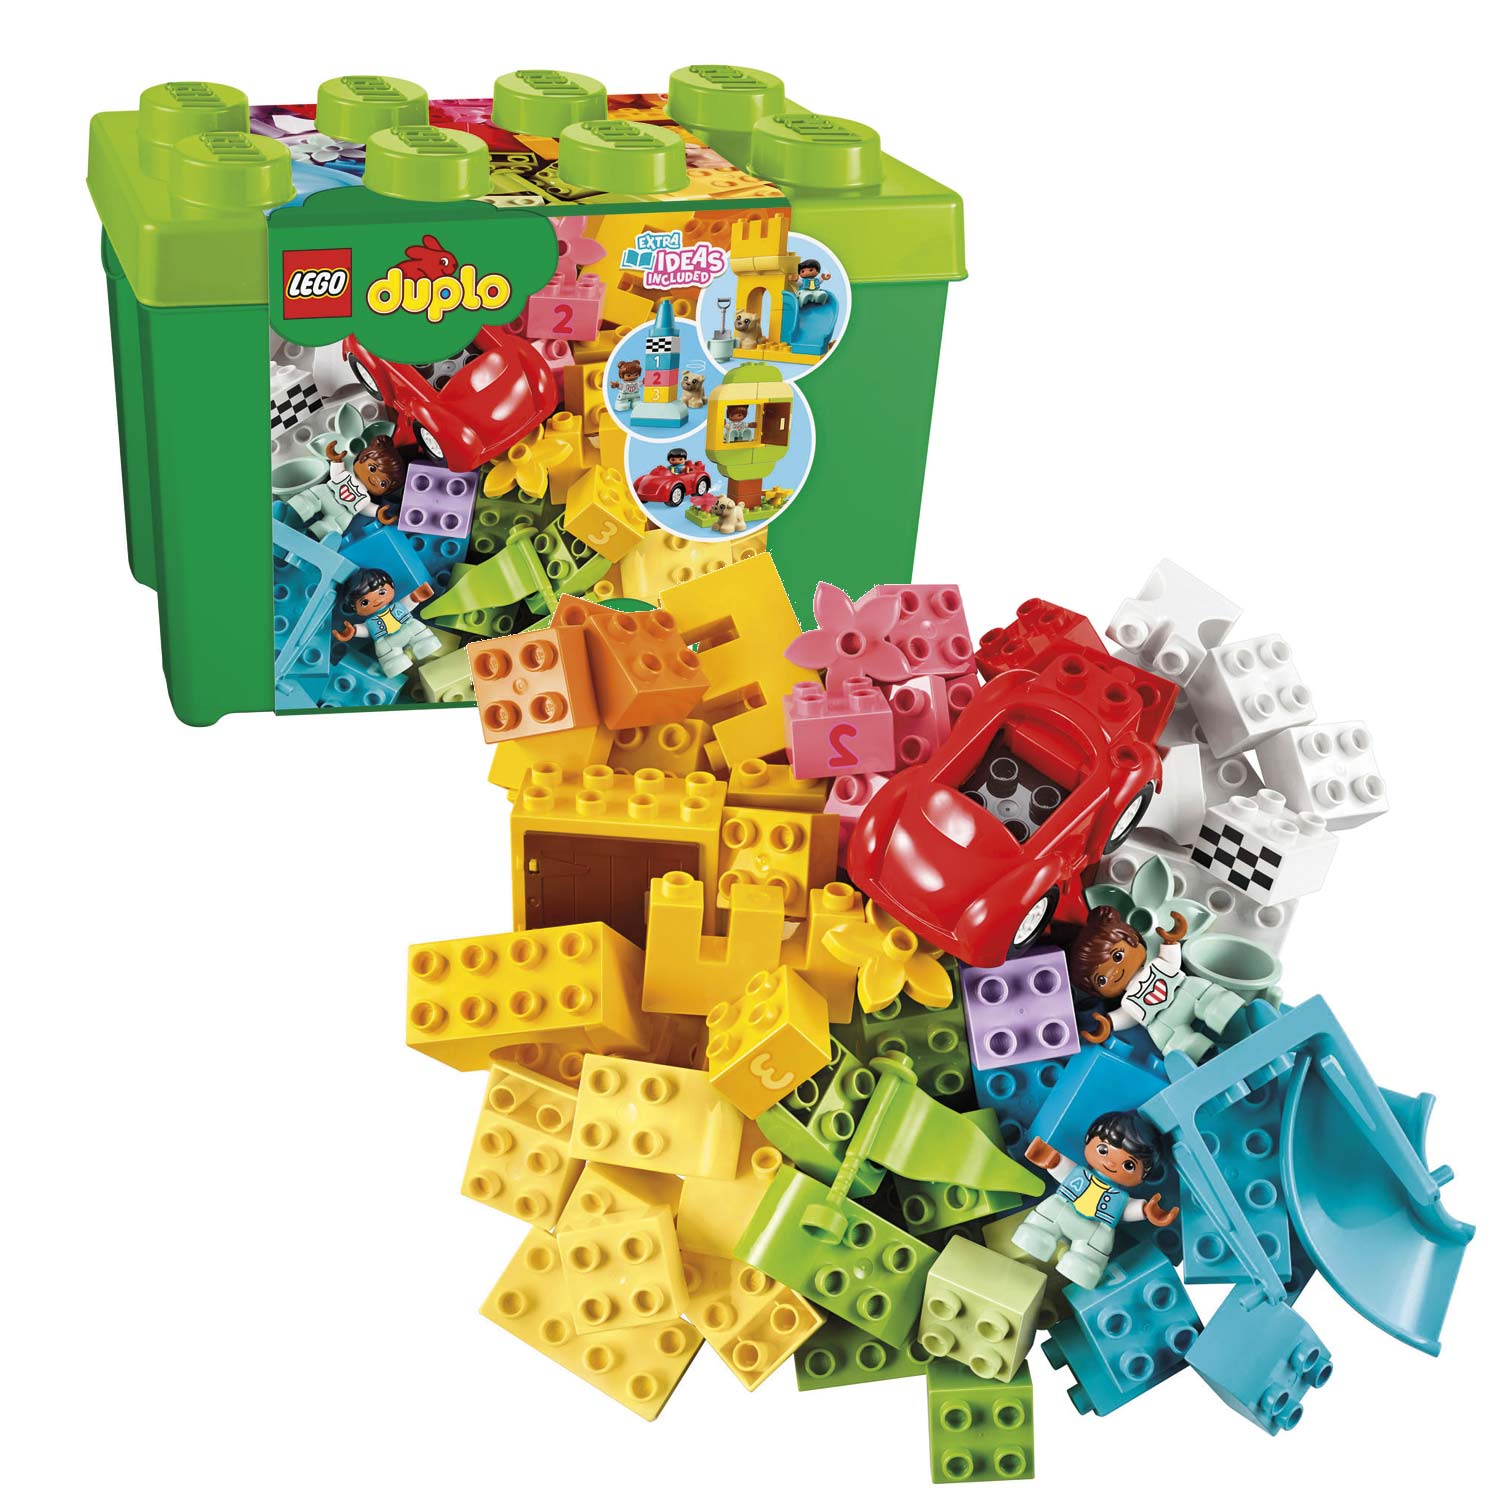 LEGO DUPLO 10914 storage box building blocks | Toys